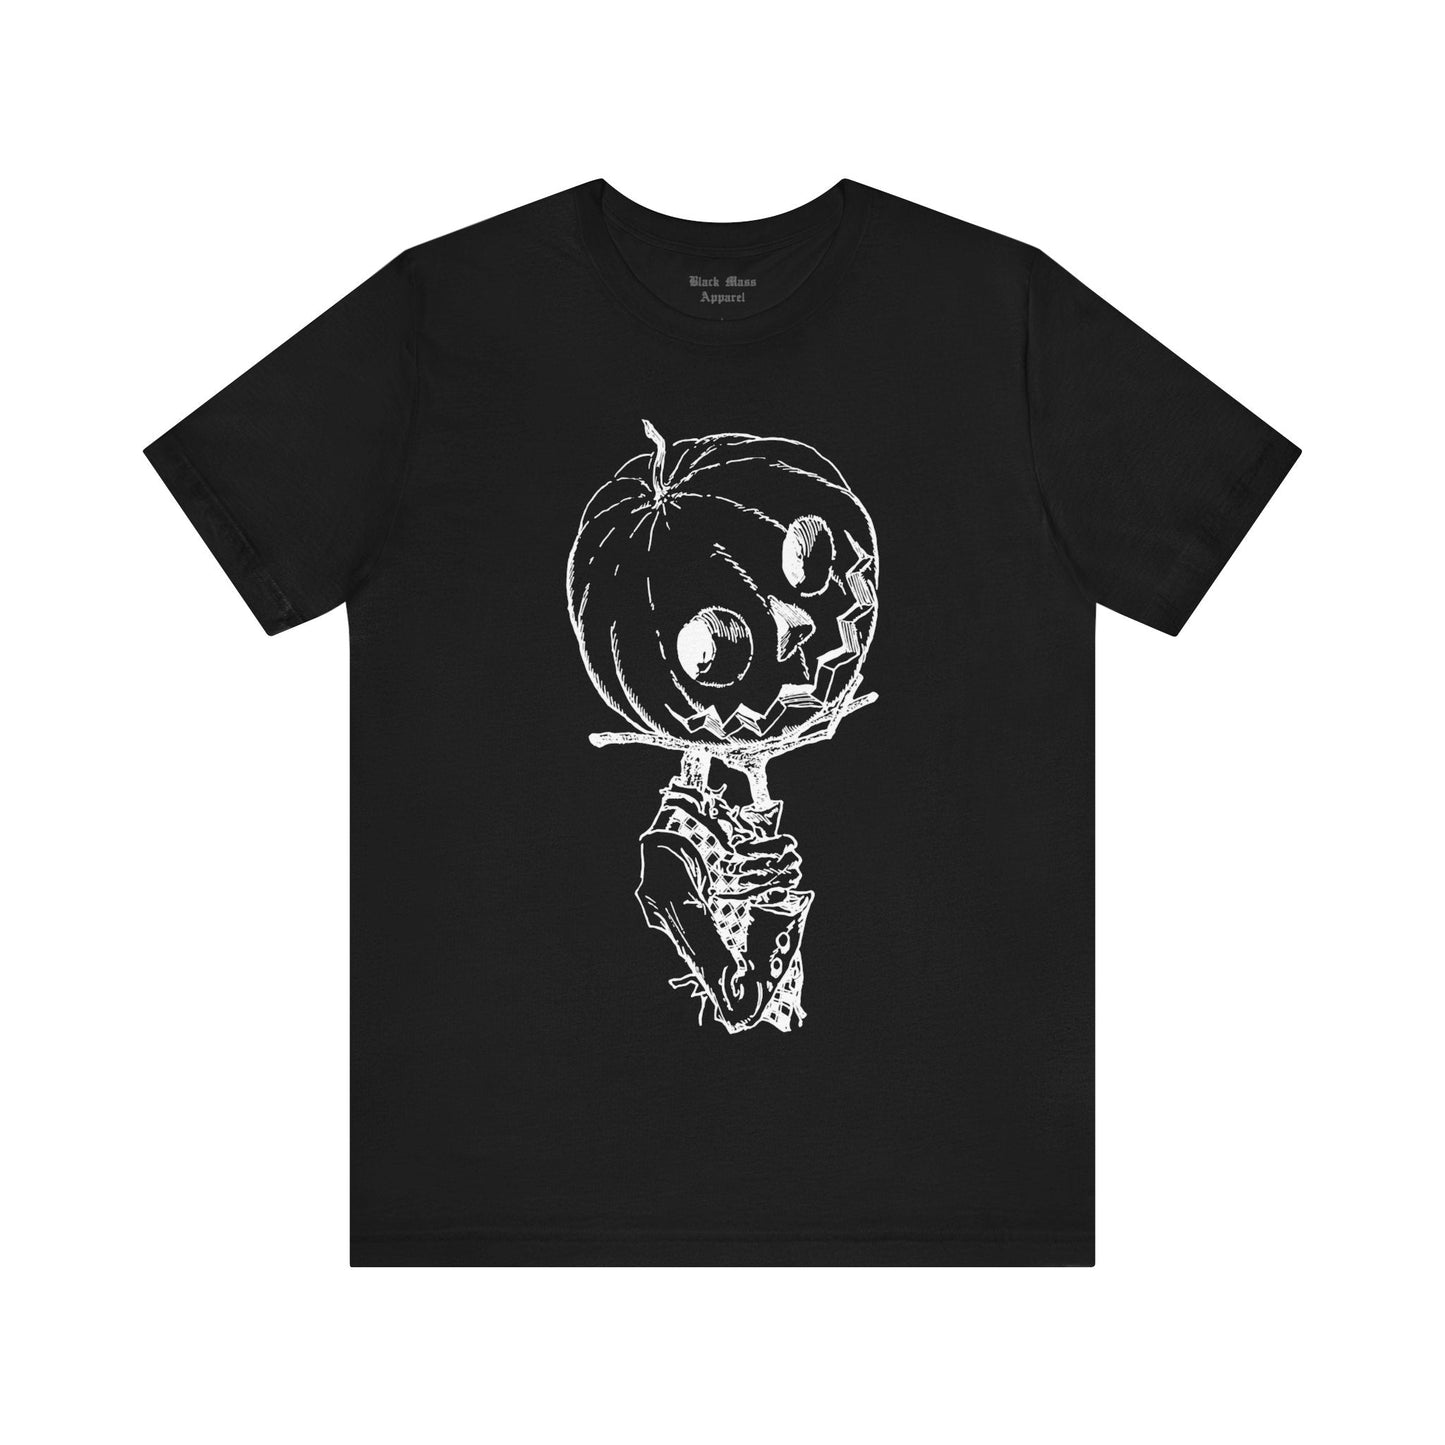 Jack Pumpkinhead - Black Mass Apparel - T-Shirt